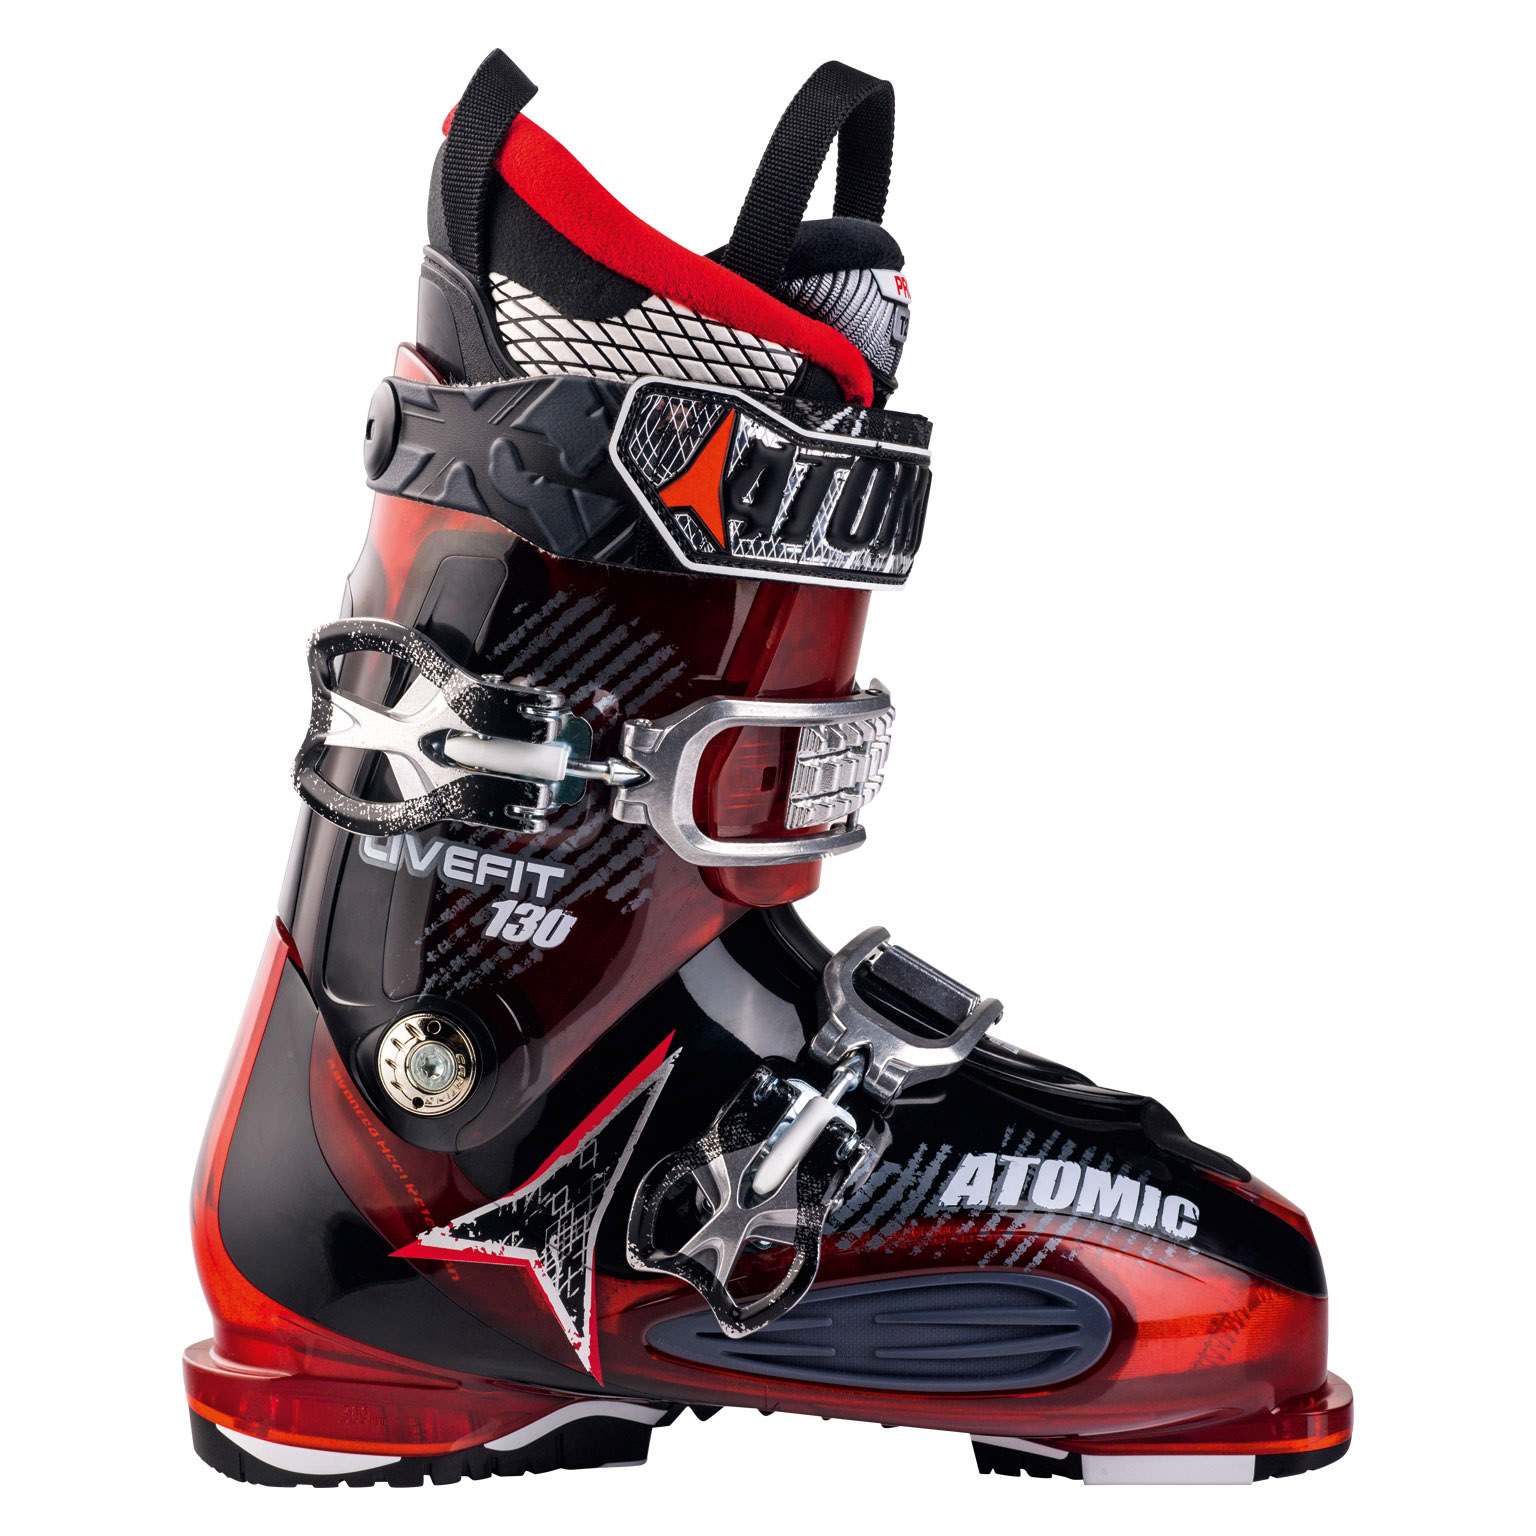 Ski Boots | Atomic Livefit 130 | Ski 